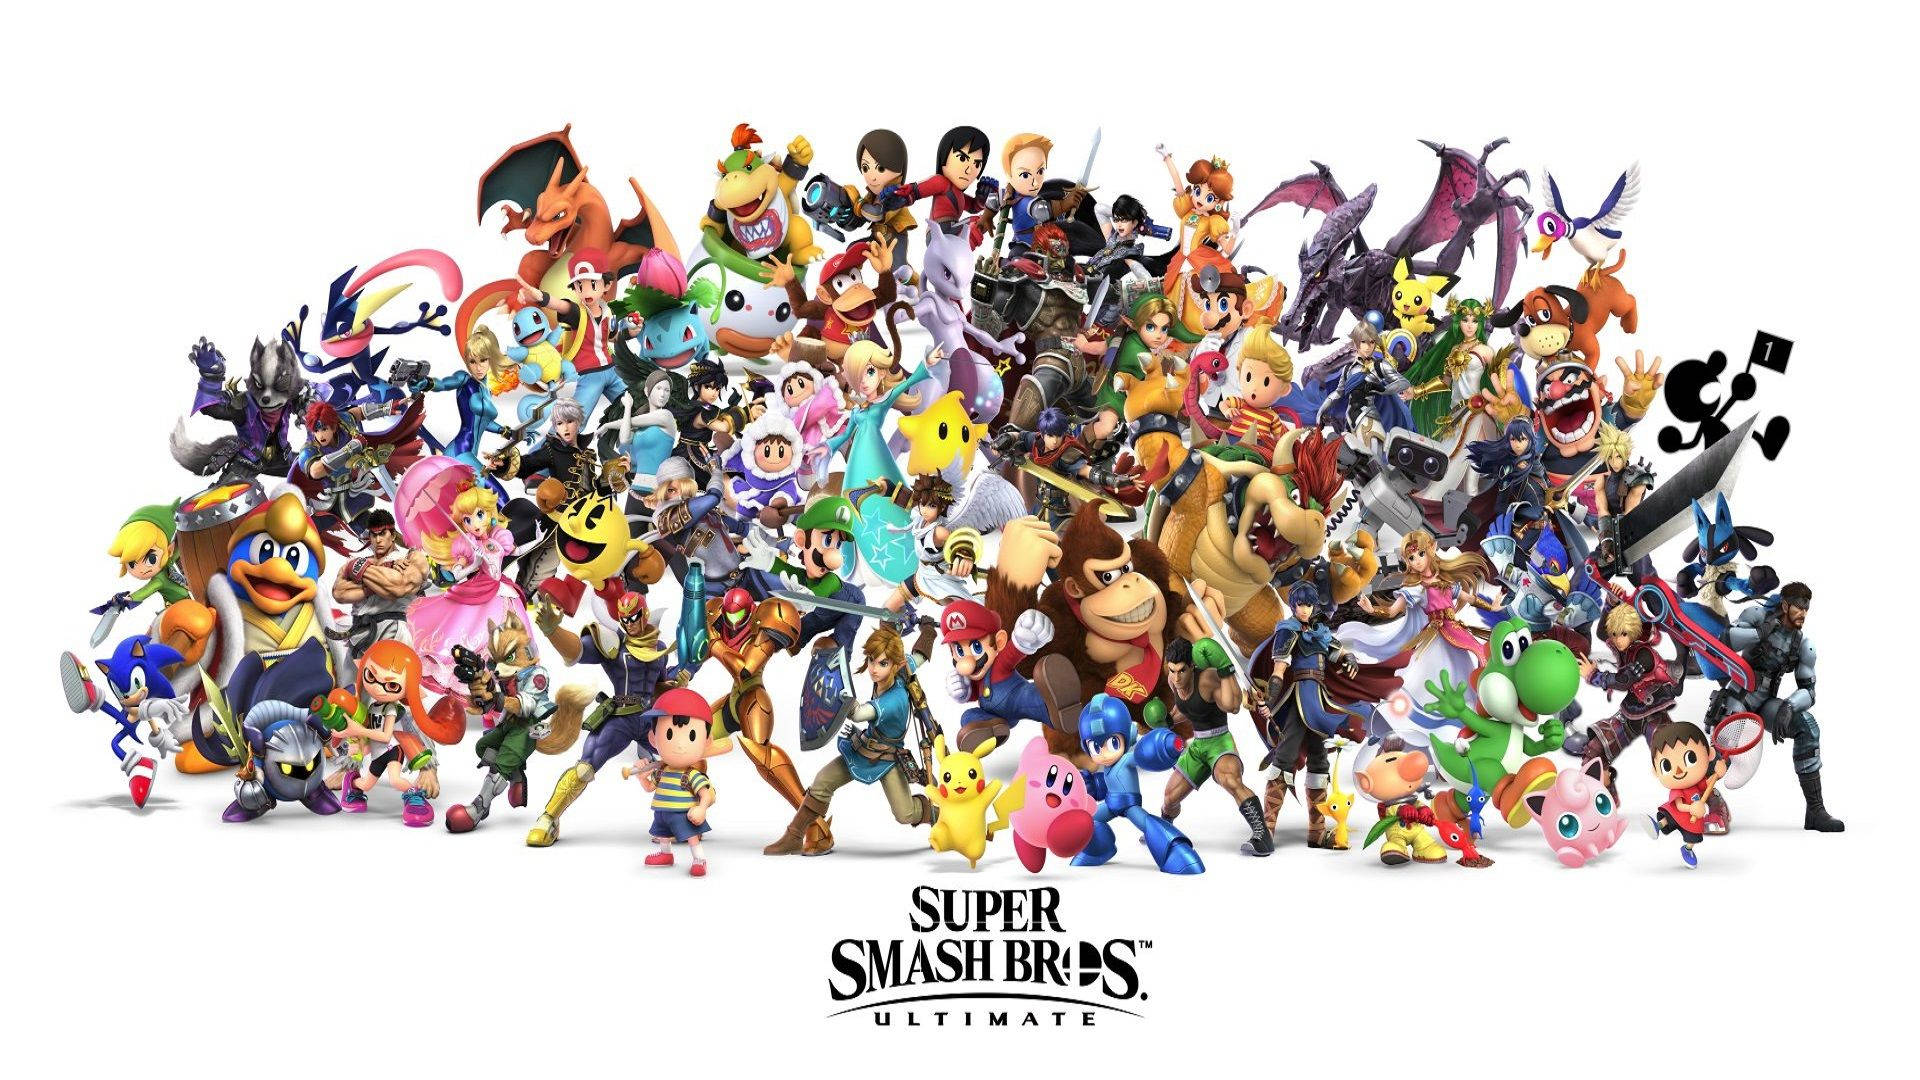 Smash Bros Ultimate Game Characters